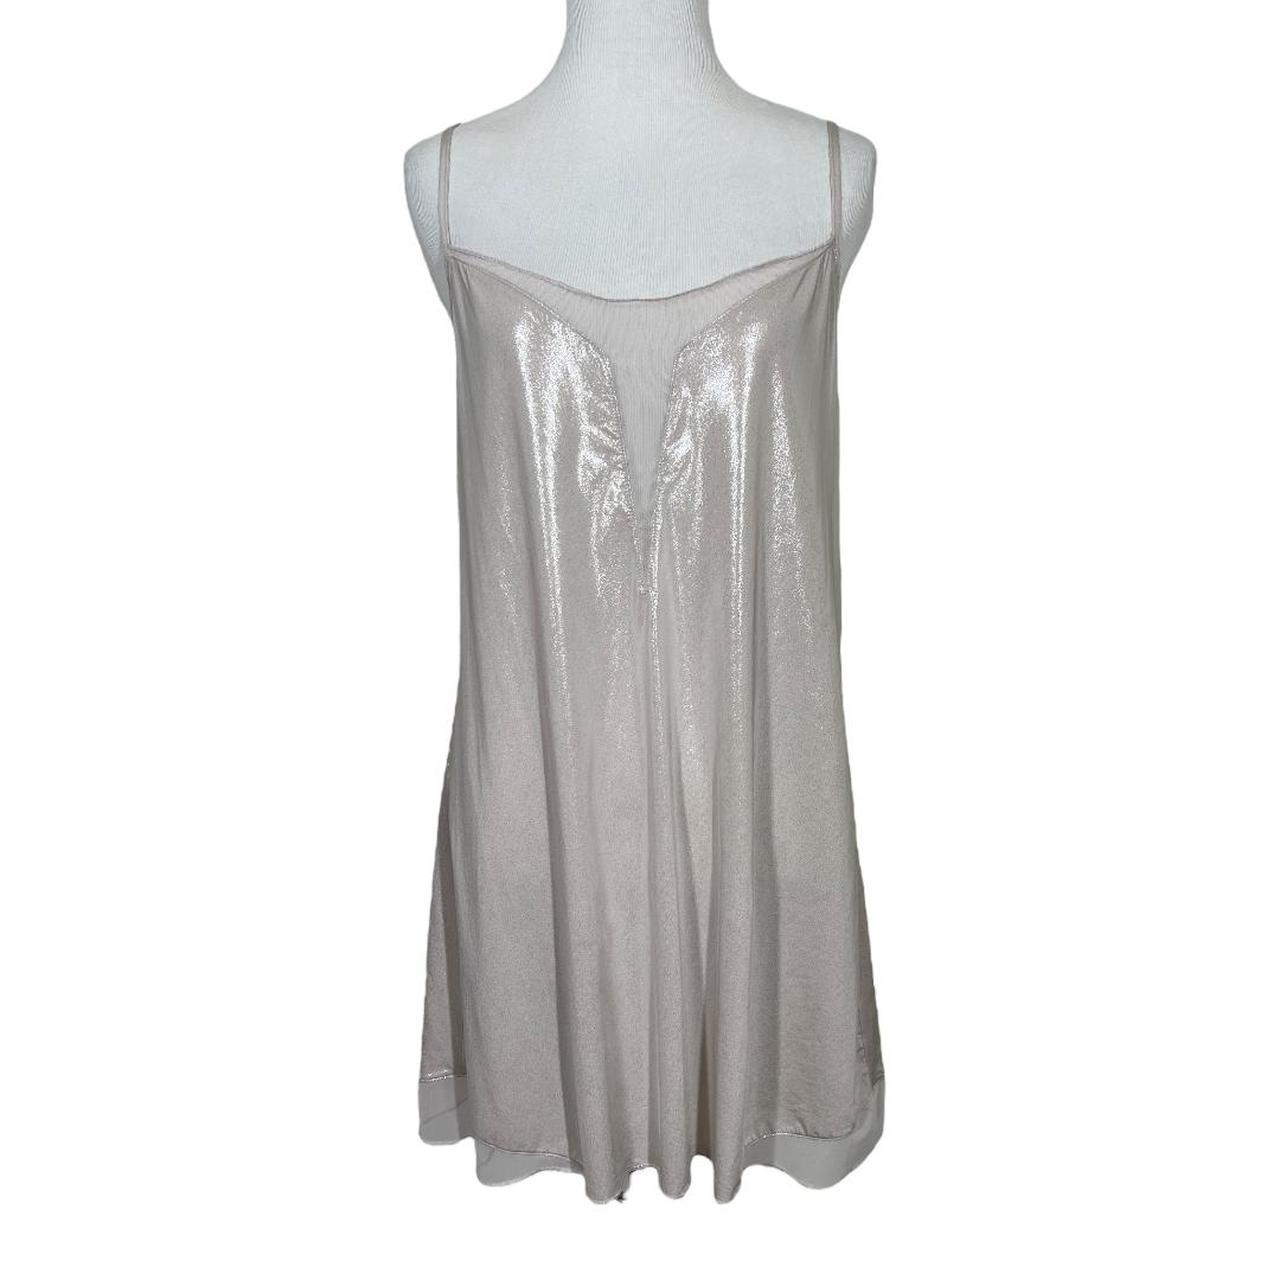 Victoria's Secret Metallic Shimmer Slip Dress. Sheer... - Depop